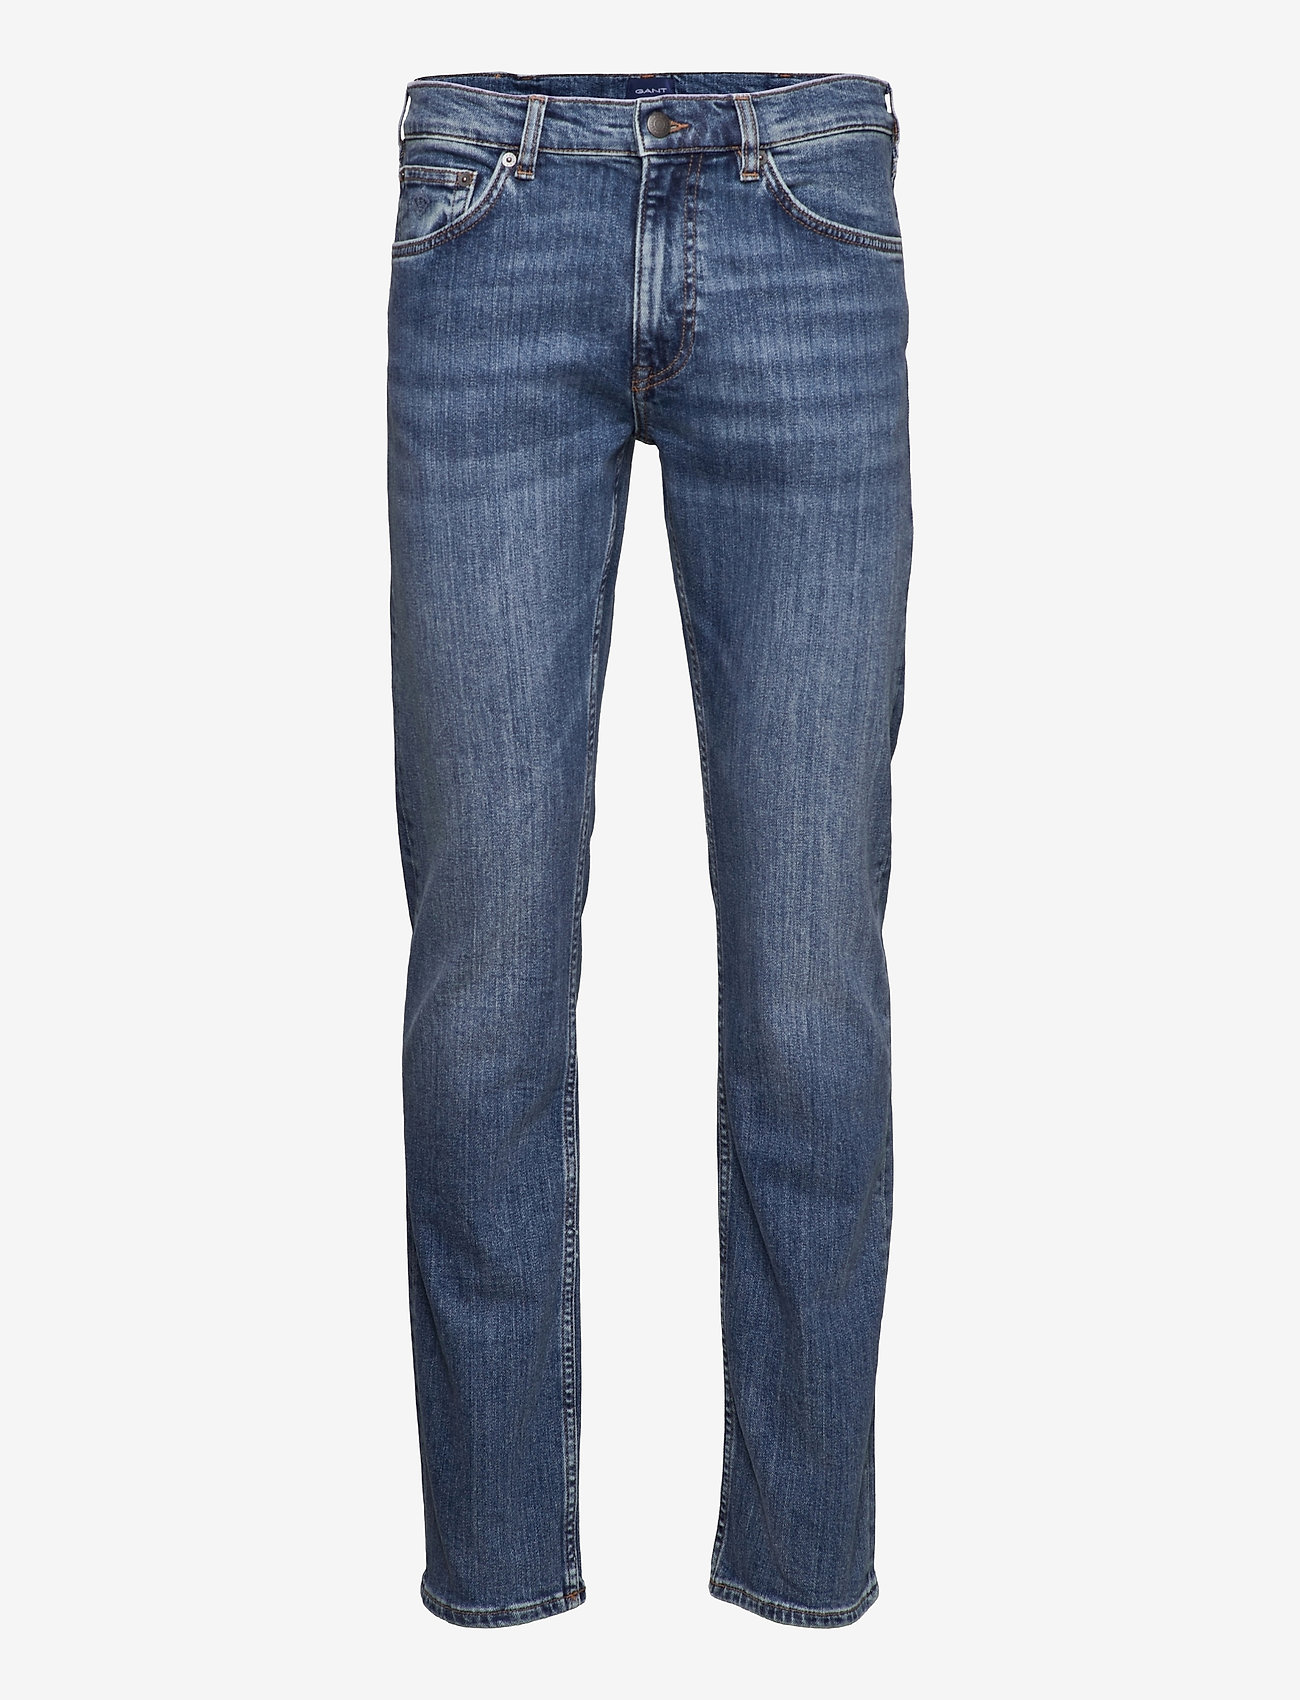 GANT - ARLEY GANT JEANS - regular jeans - mid blue worn in - 0